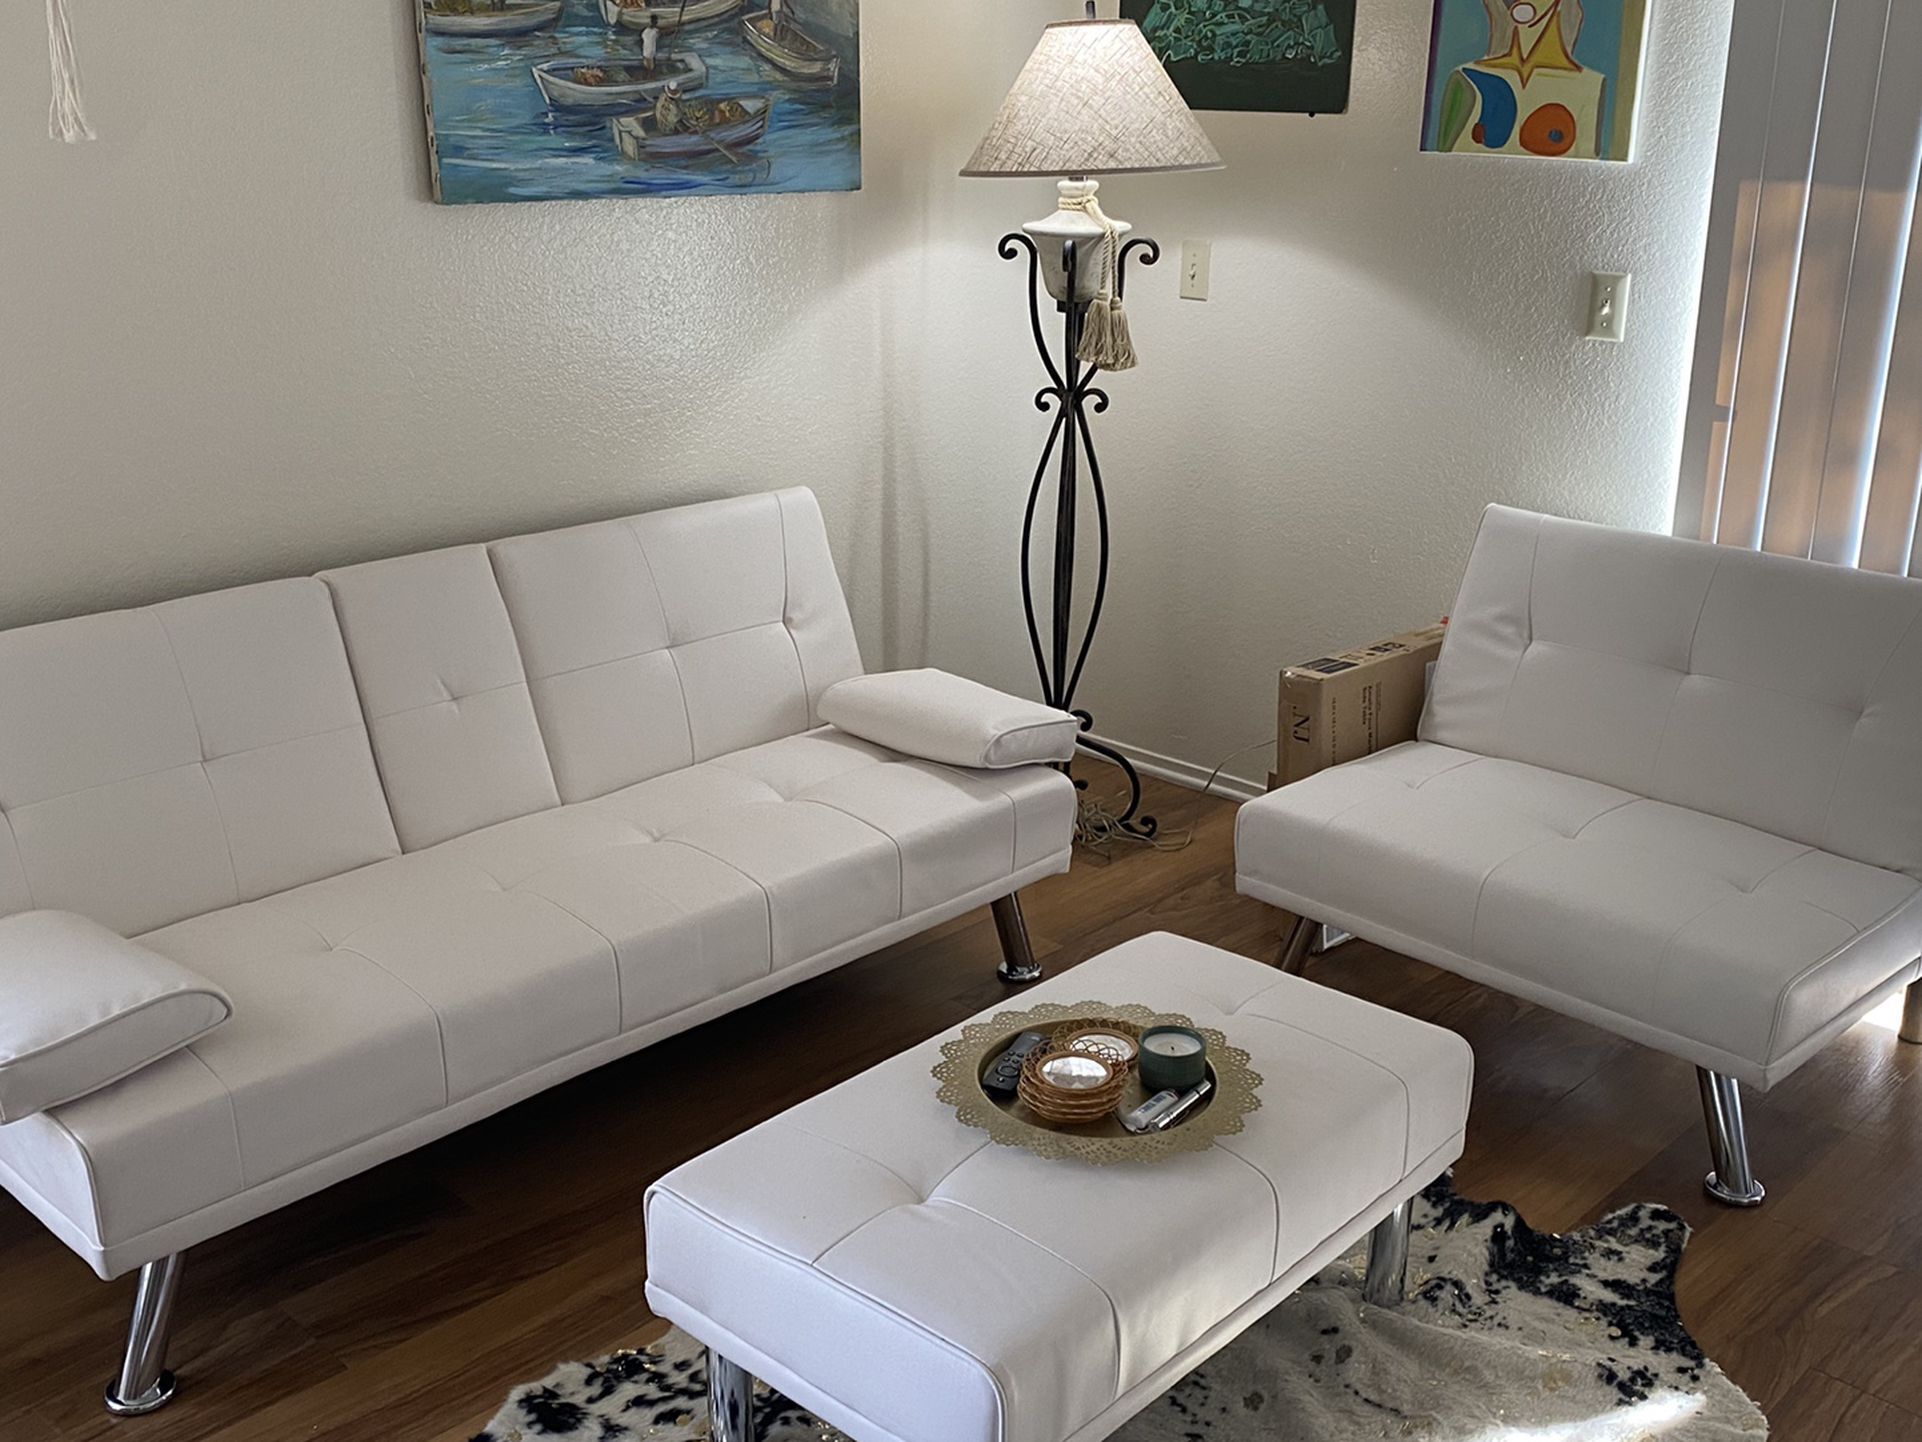 NEW White Futon Sofa- Adjustable Set Up!